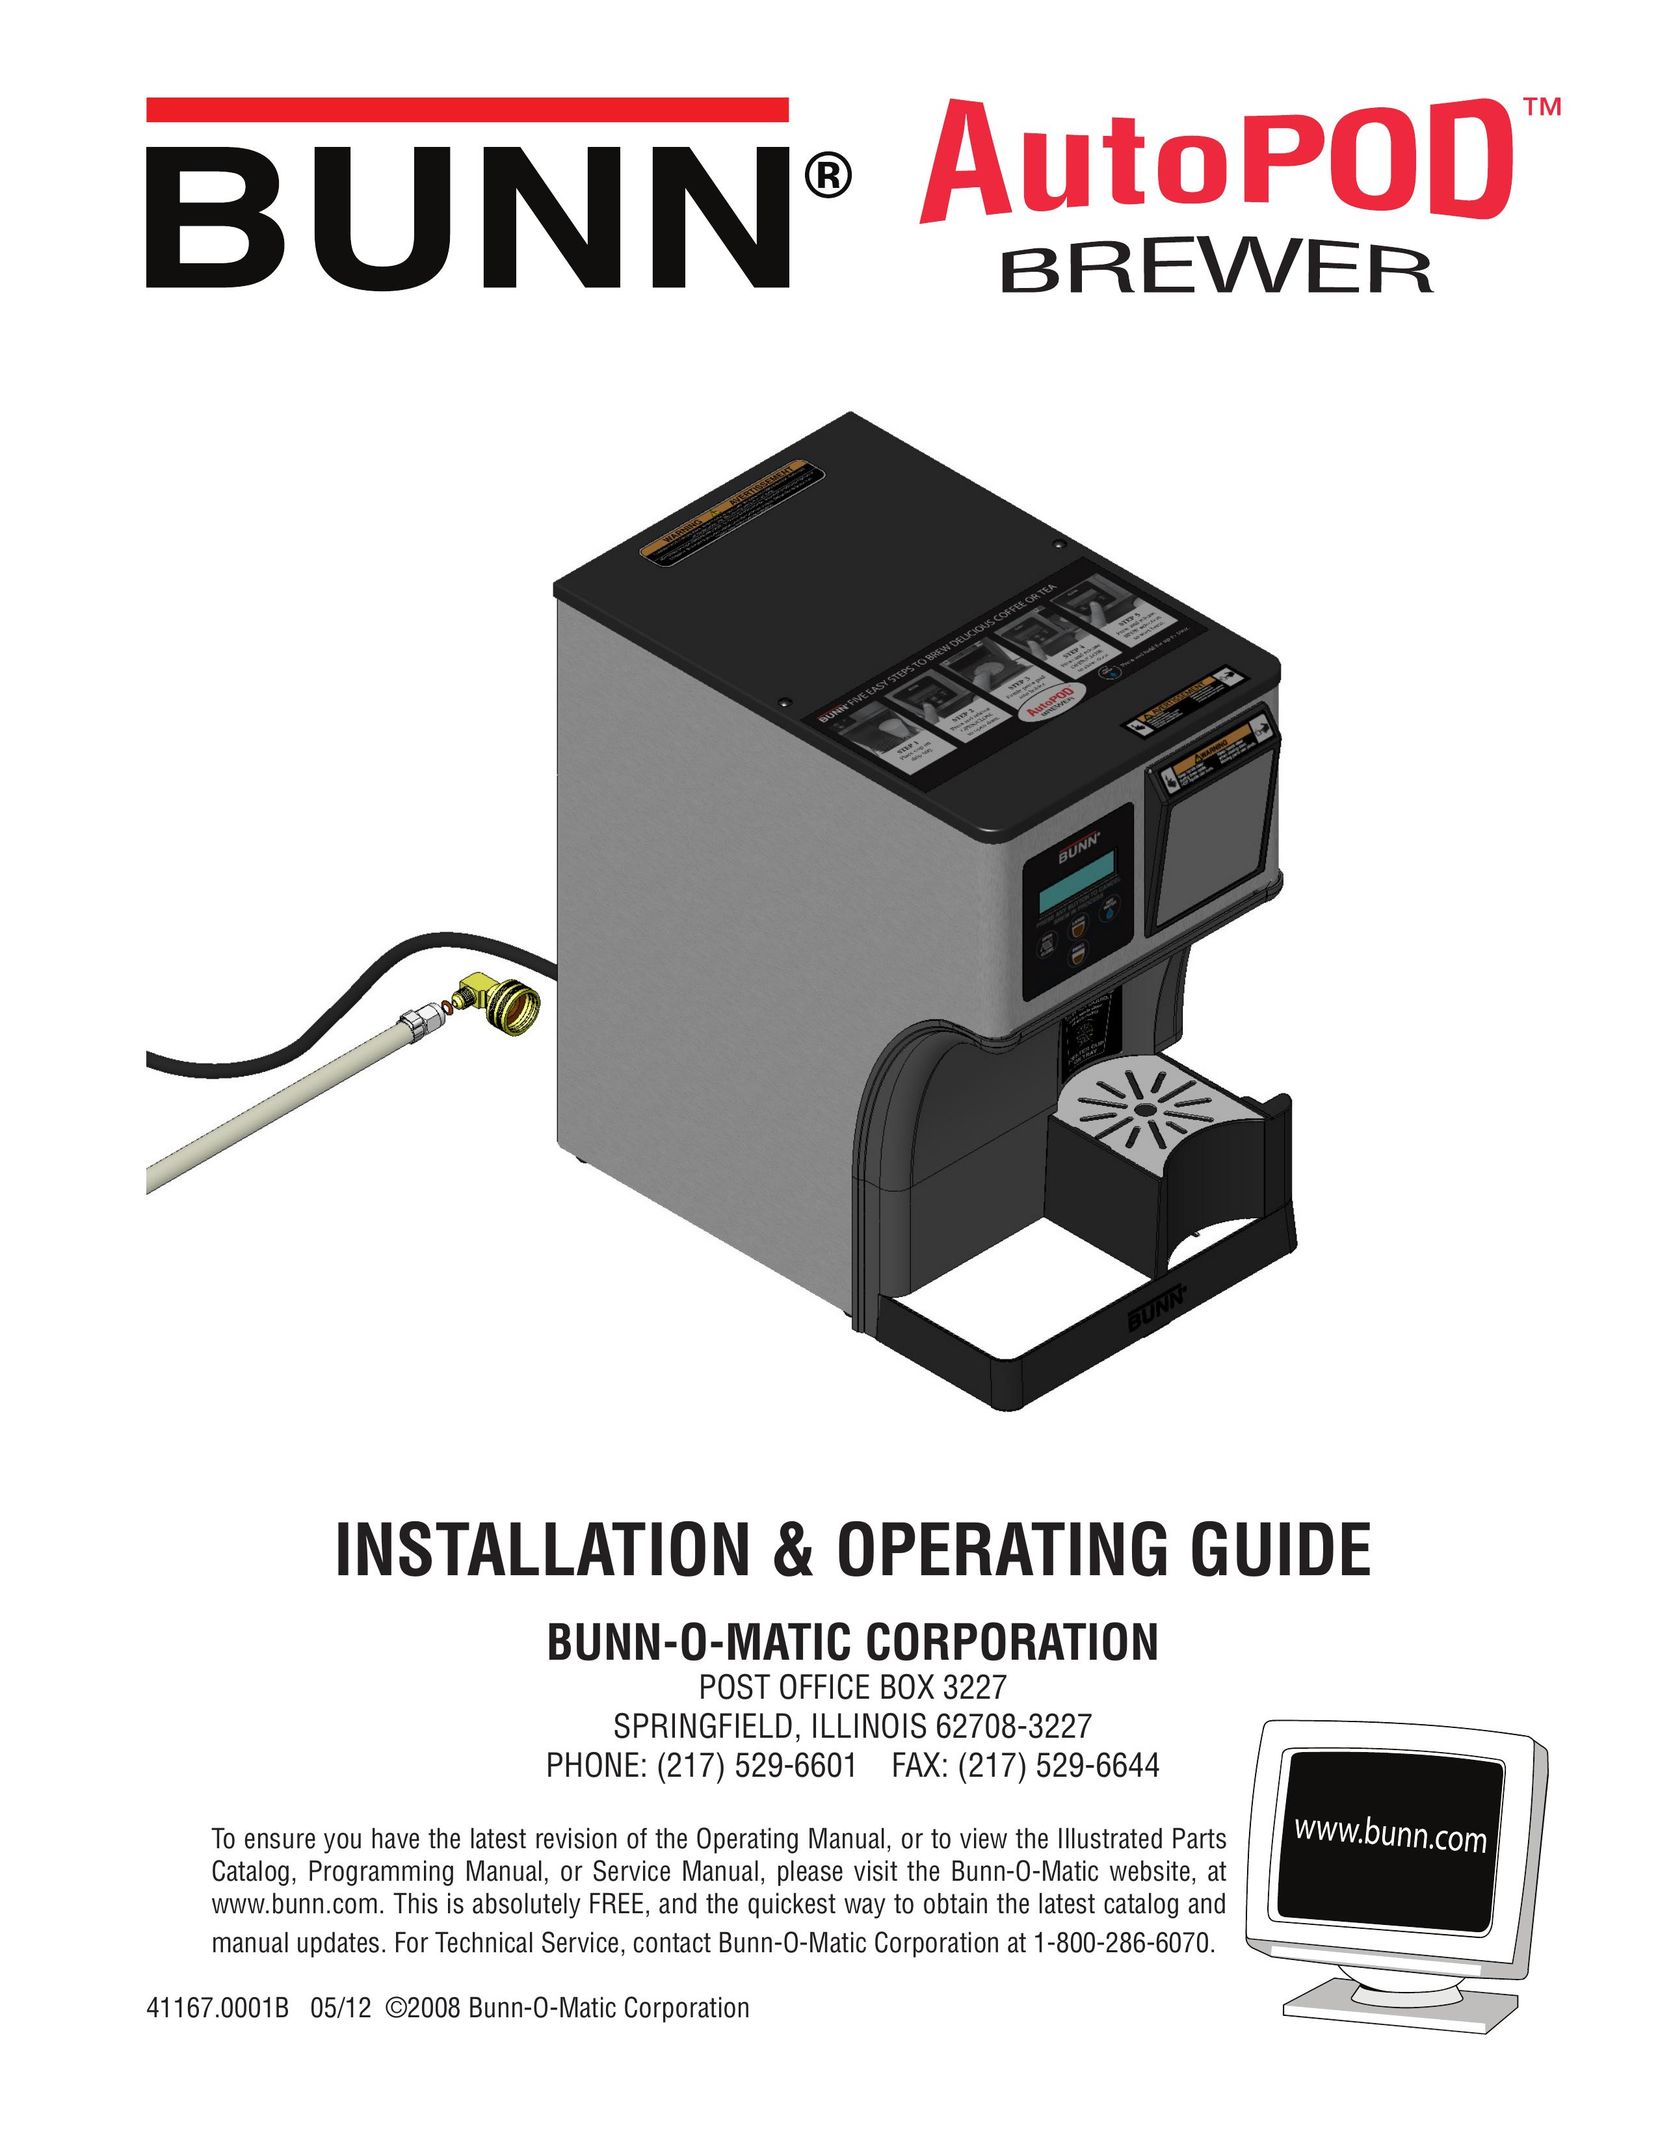 Bunn 41167.0001B Coffeemaker User Manual